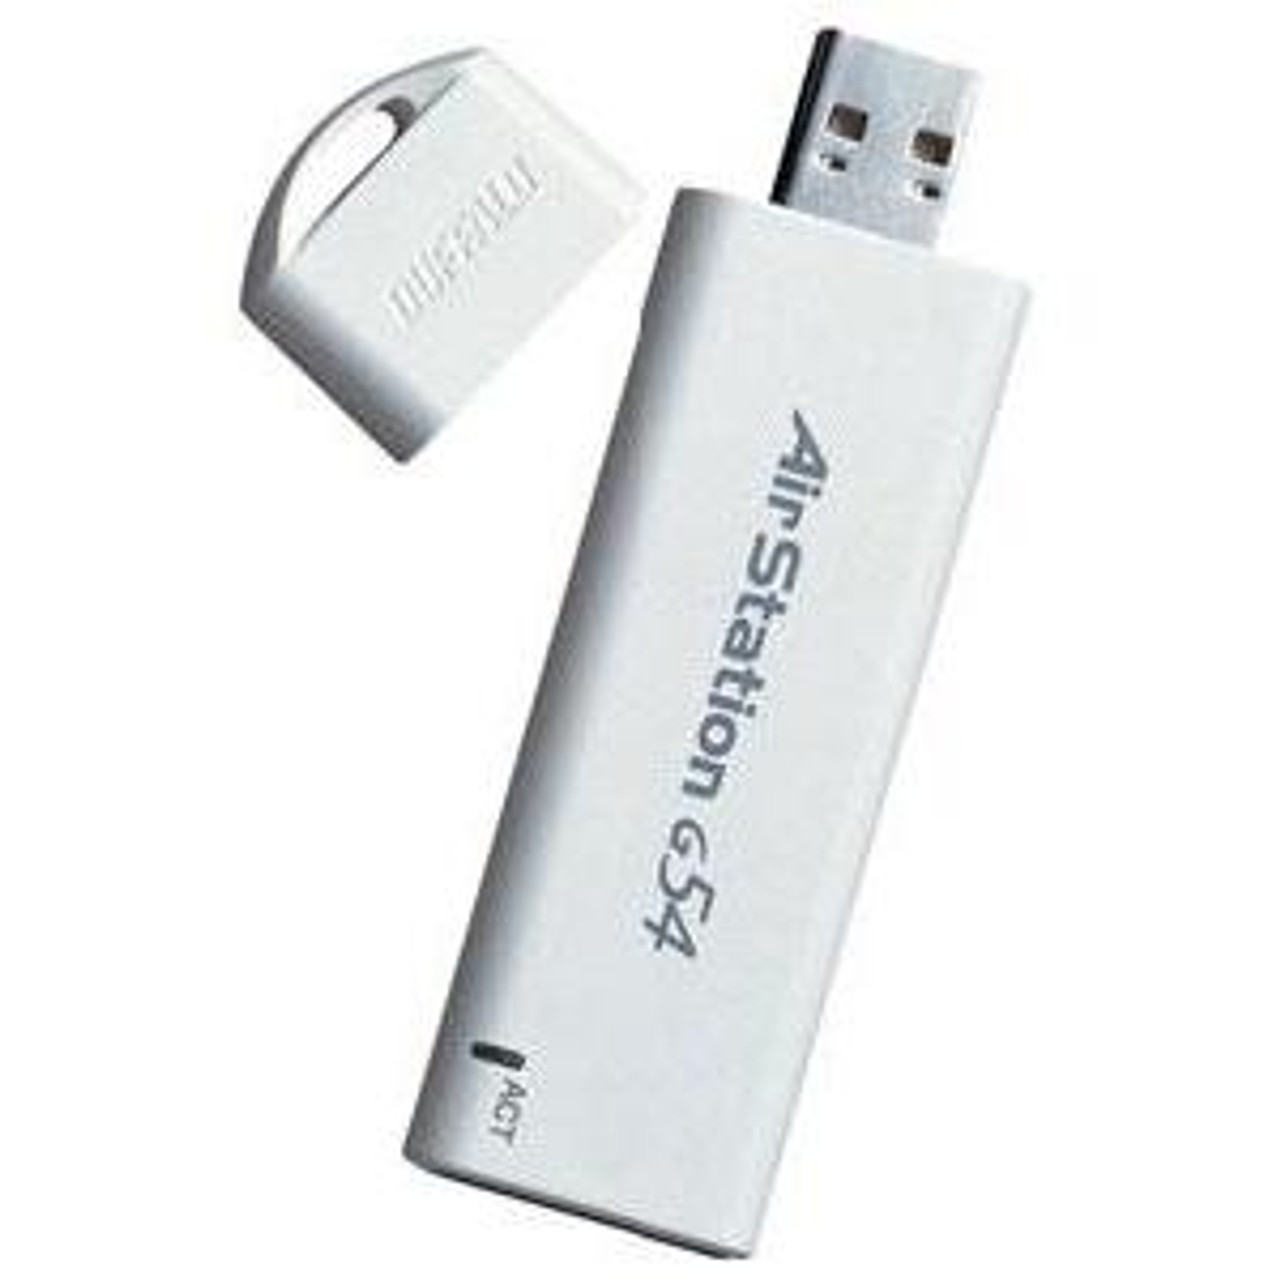 WLI-U2-KG54-AI Buffalo AirStation 54Mbps Wireless USB 2.0 Keychain Adapter